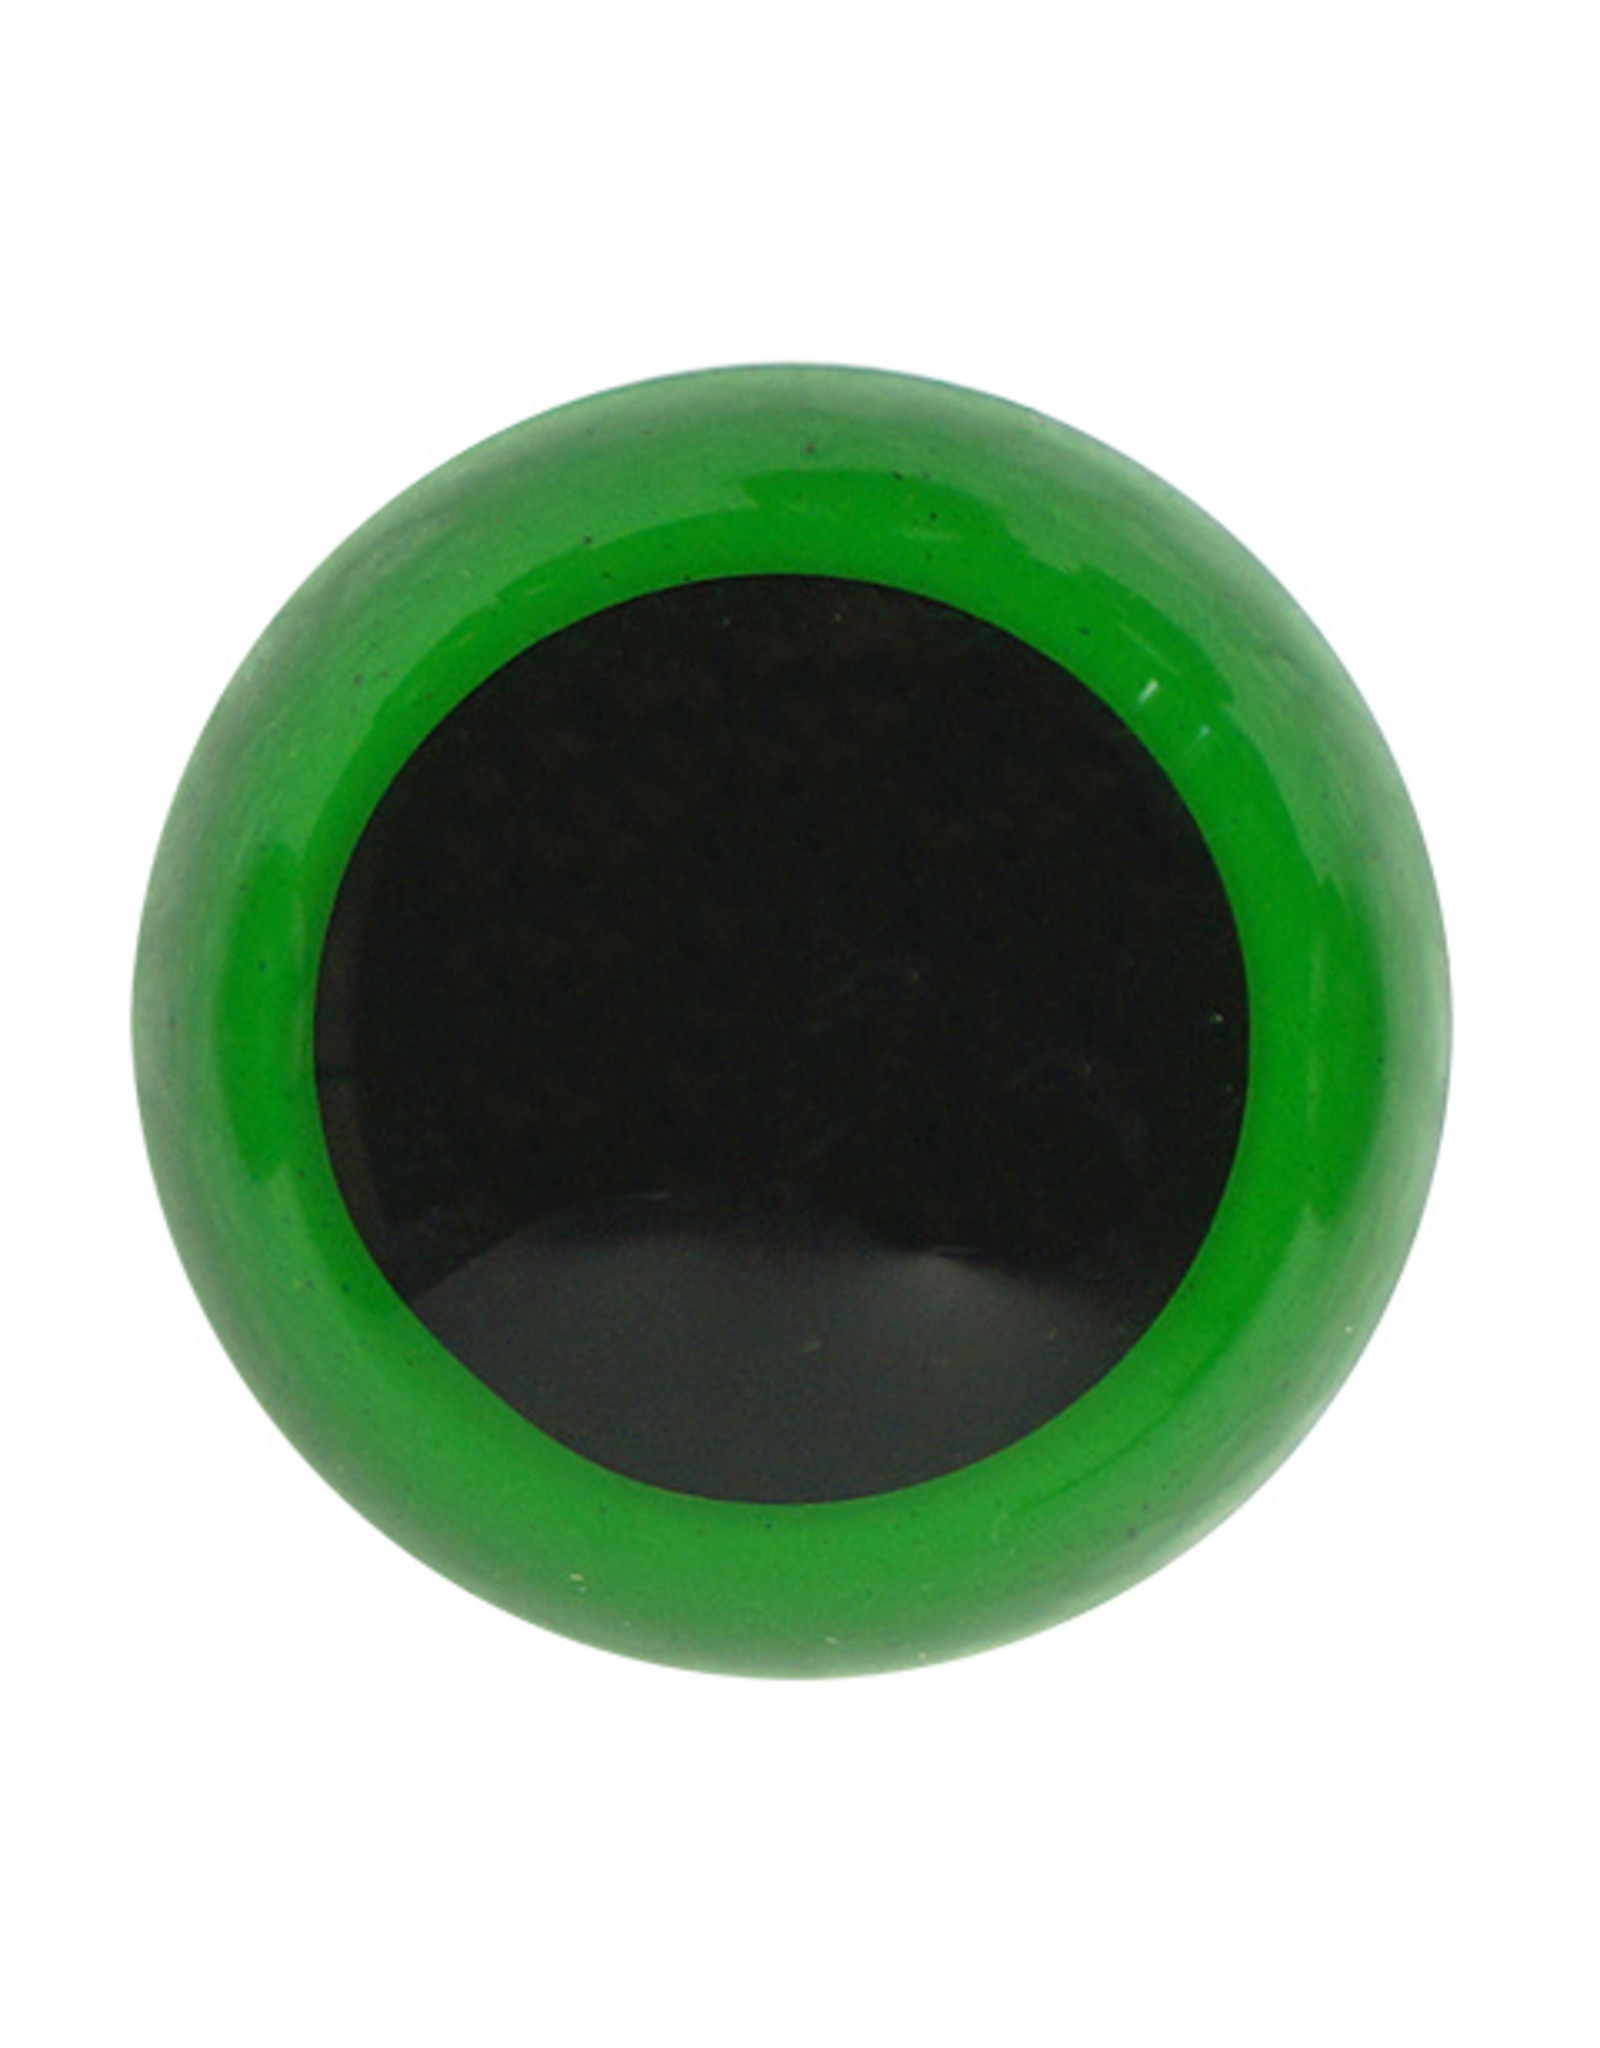 Veiligheidsogen zwart met groene rand 12mm 10st.